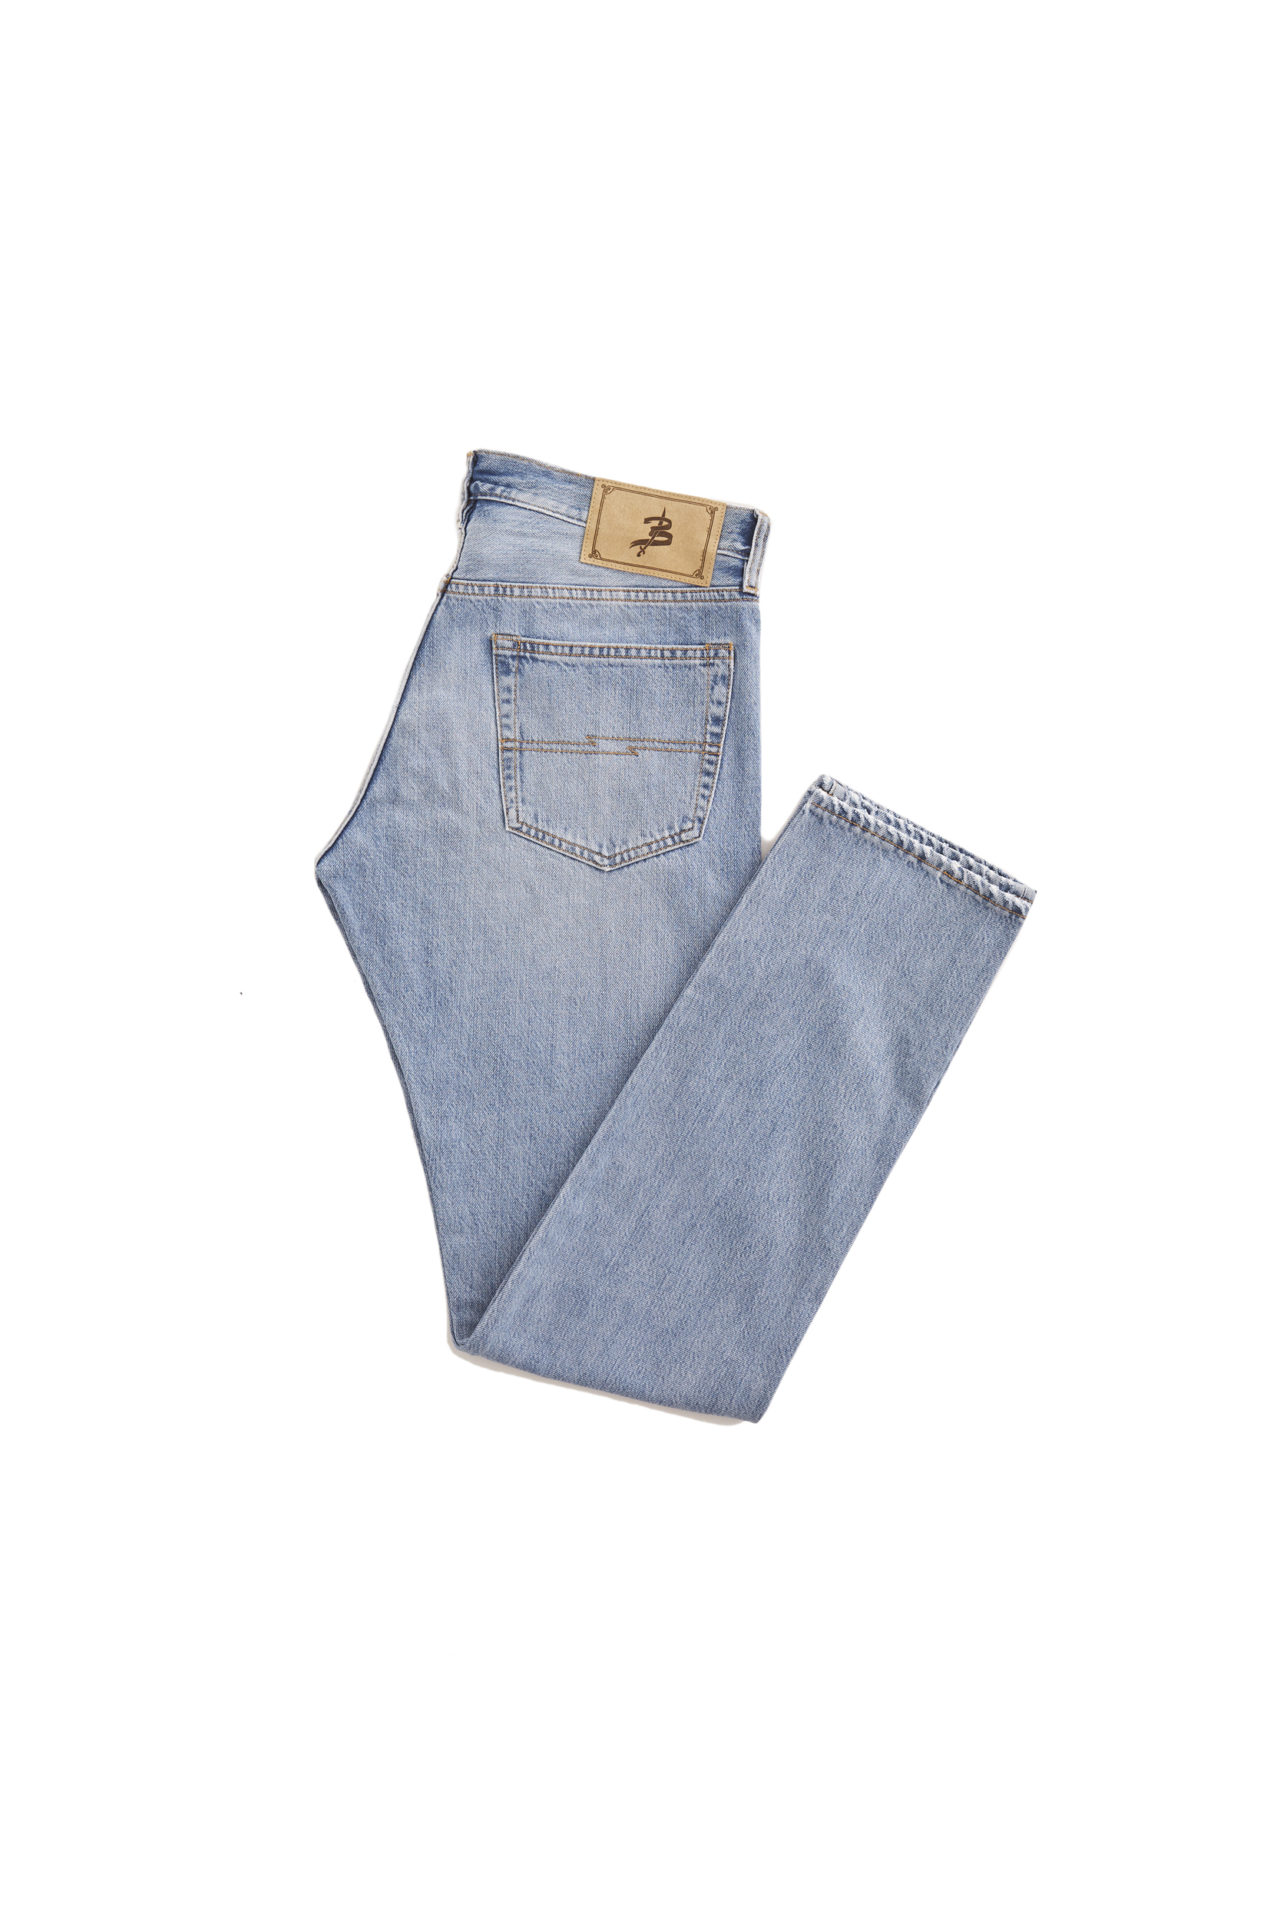 Bandito Blue Light Wash Slim Fit Selvedge Jeans - Barbanera